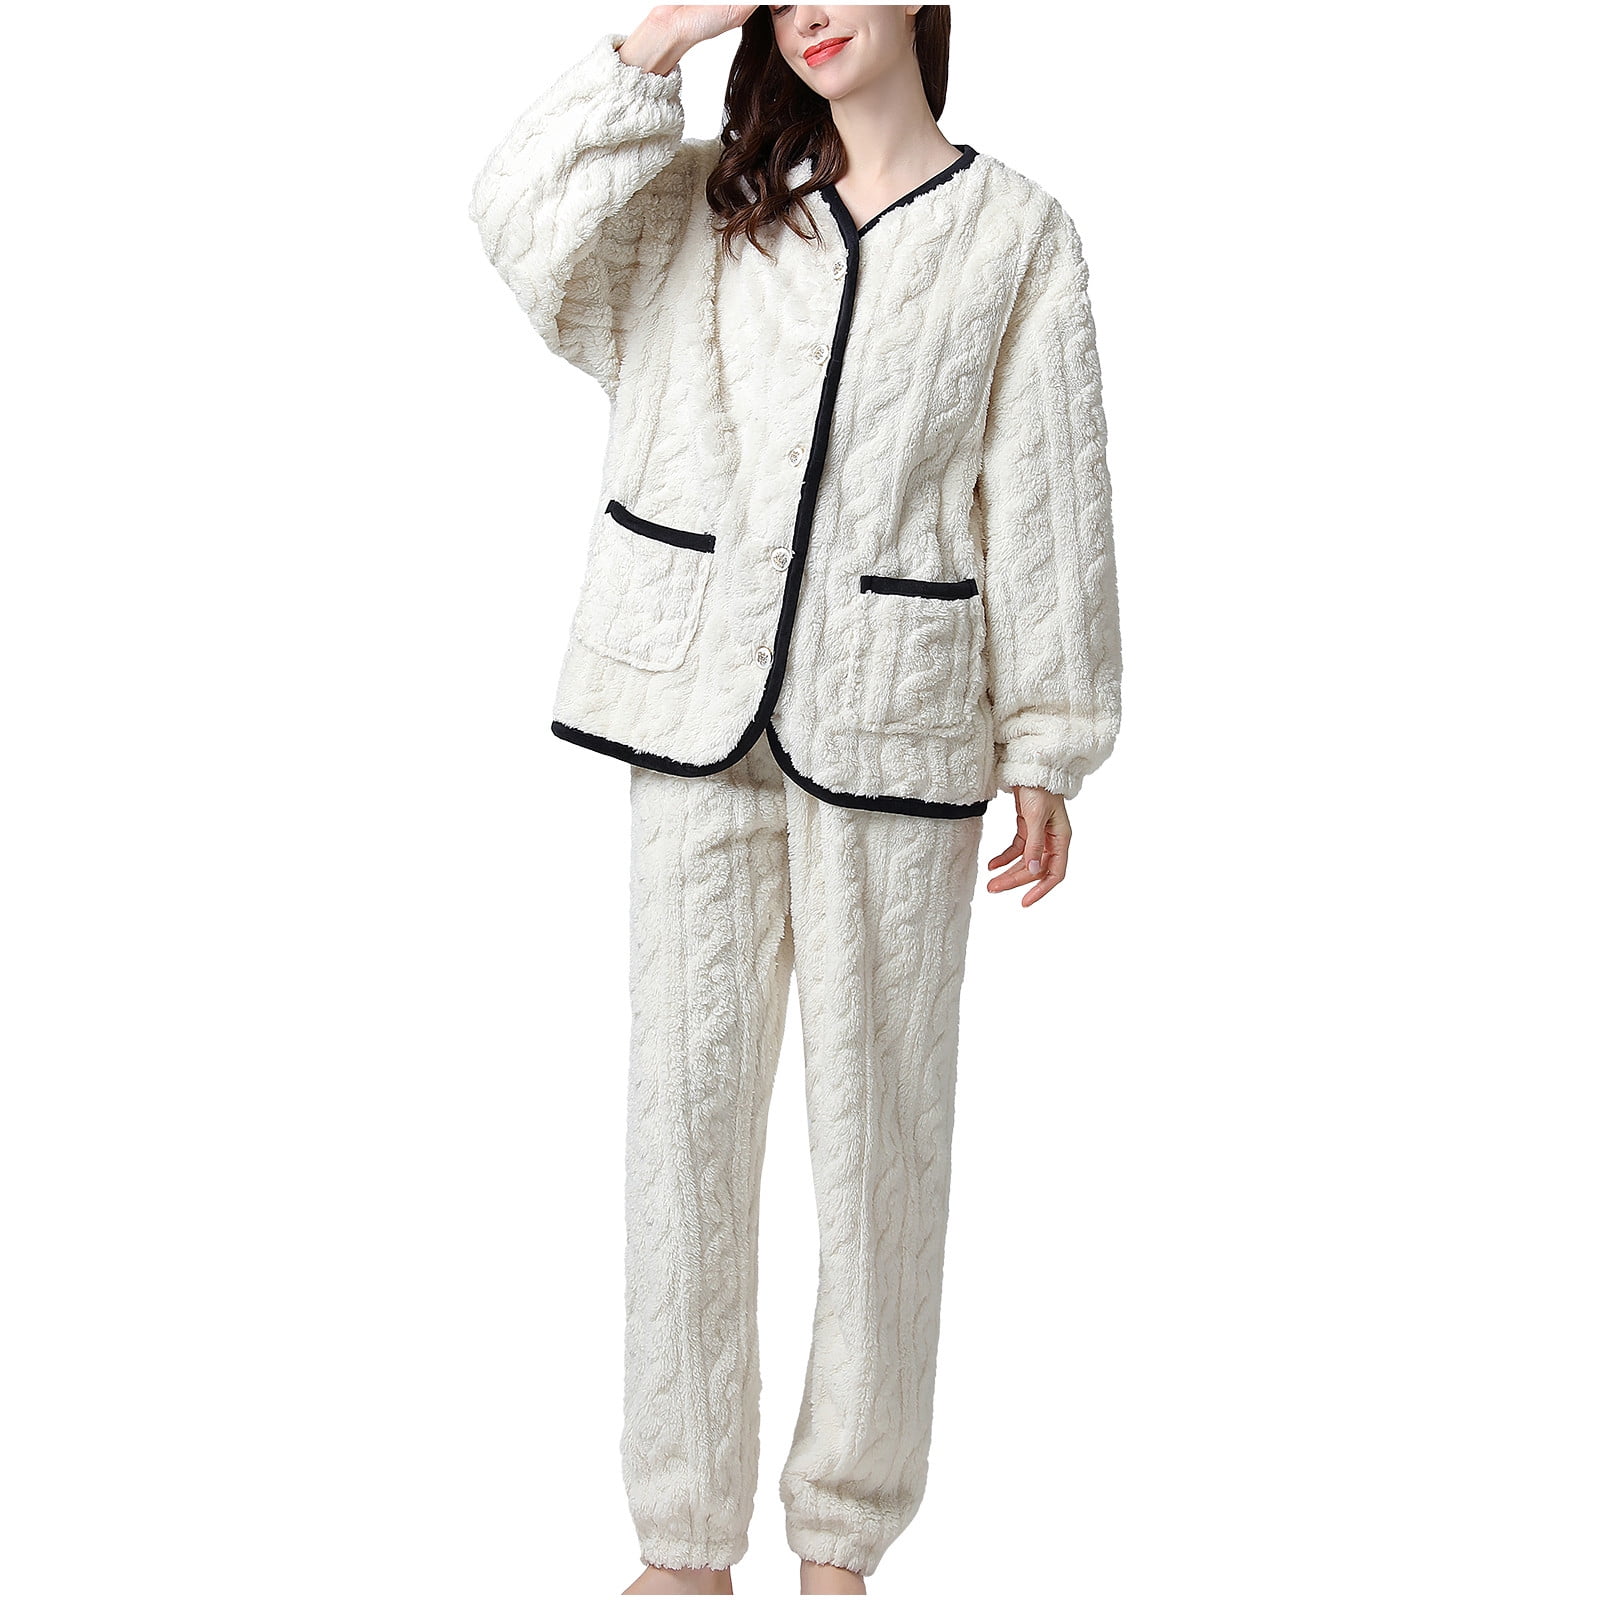 IROINNID Savings Pajamas for Women Couples Button Warm Winter Flannel ...